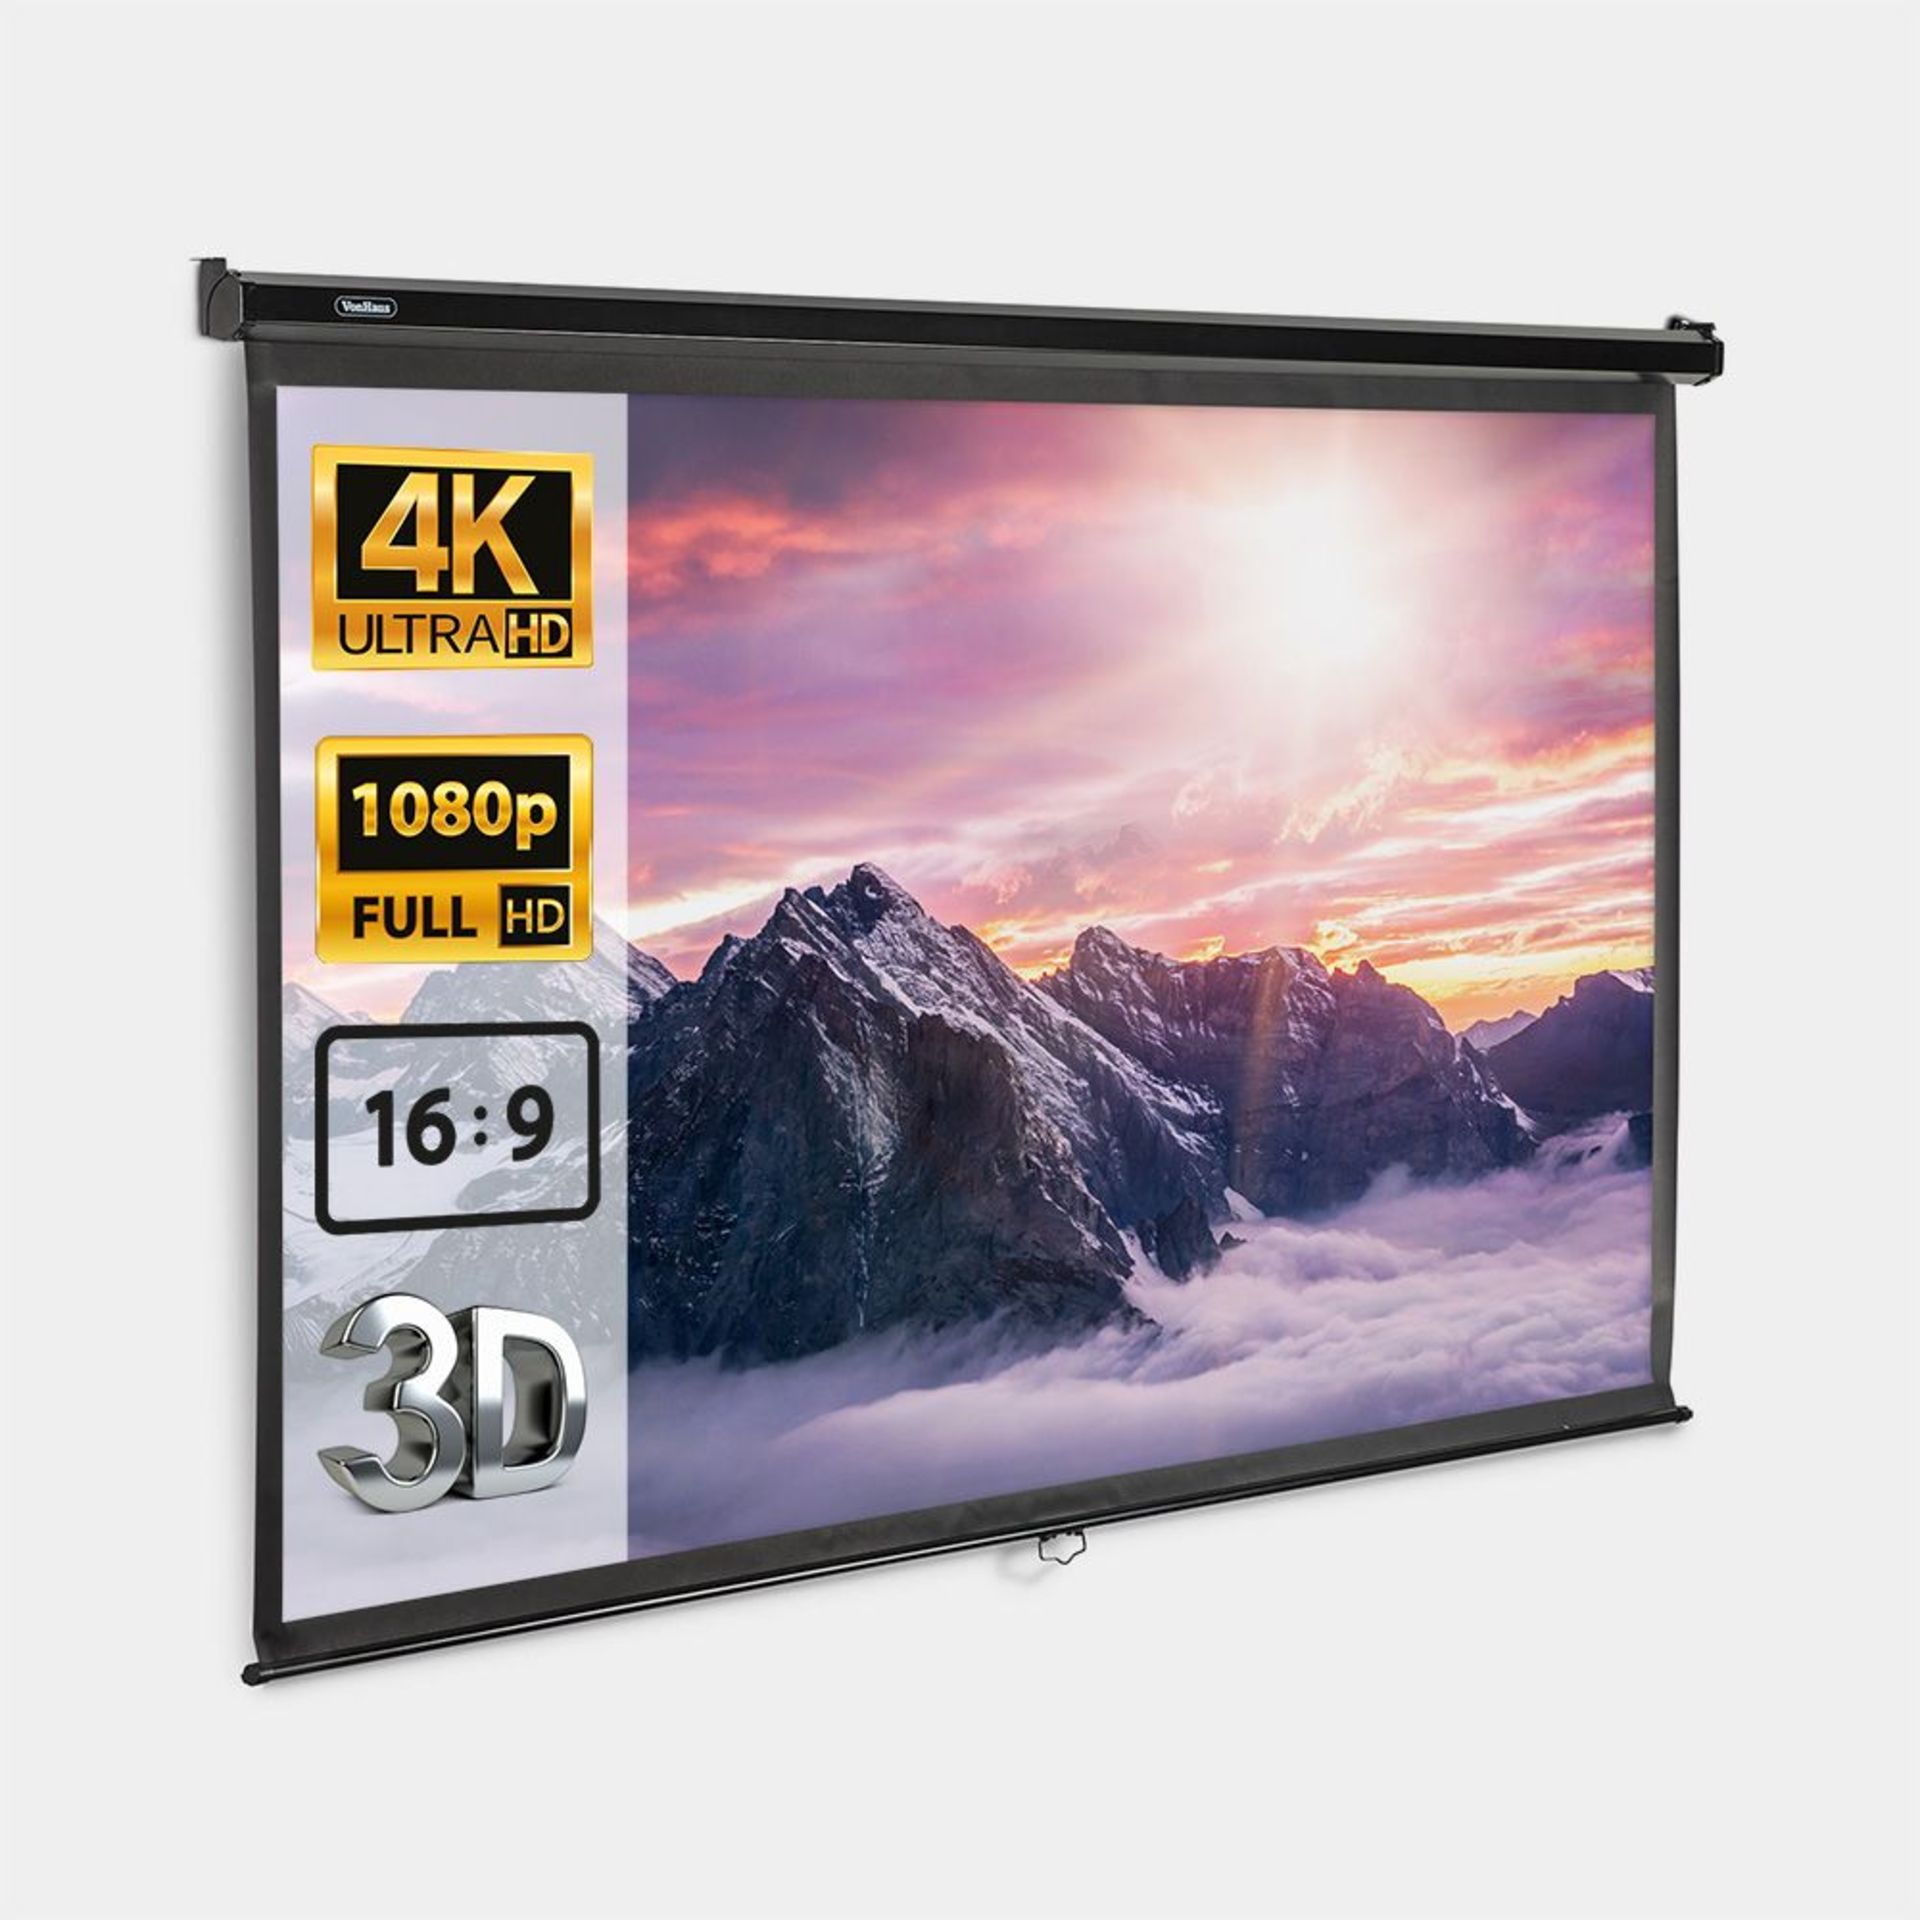 90" Projector Screen. - ER51. RRP £129.99. You’ll appreciate the high-quality matte white screen